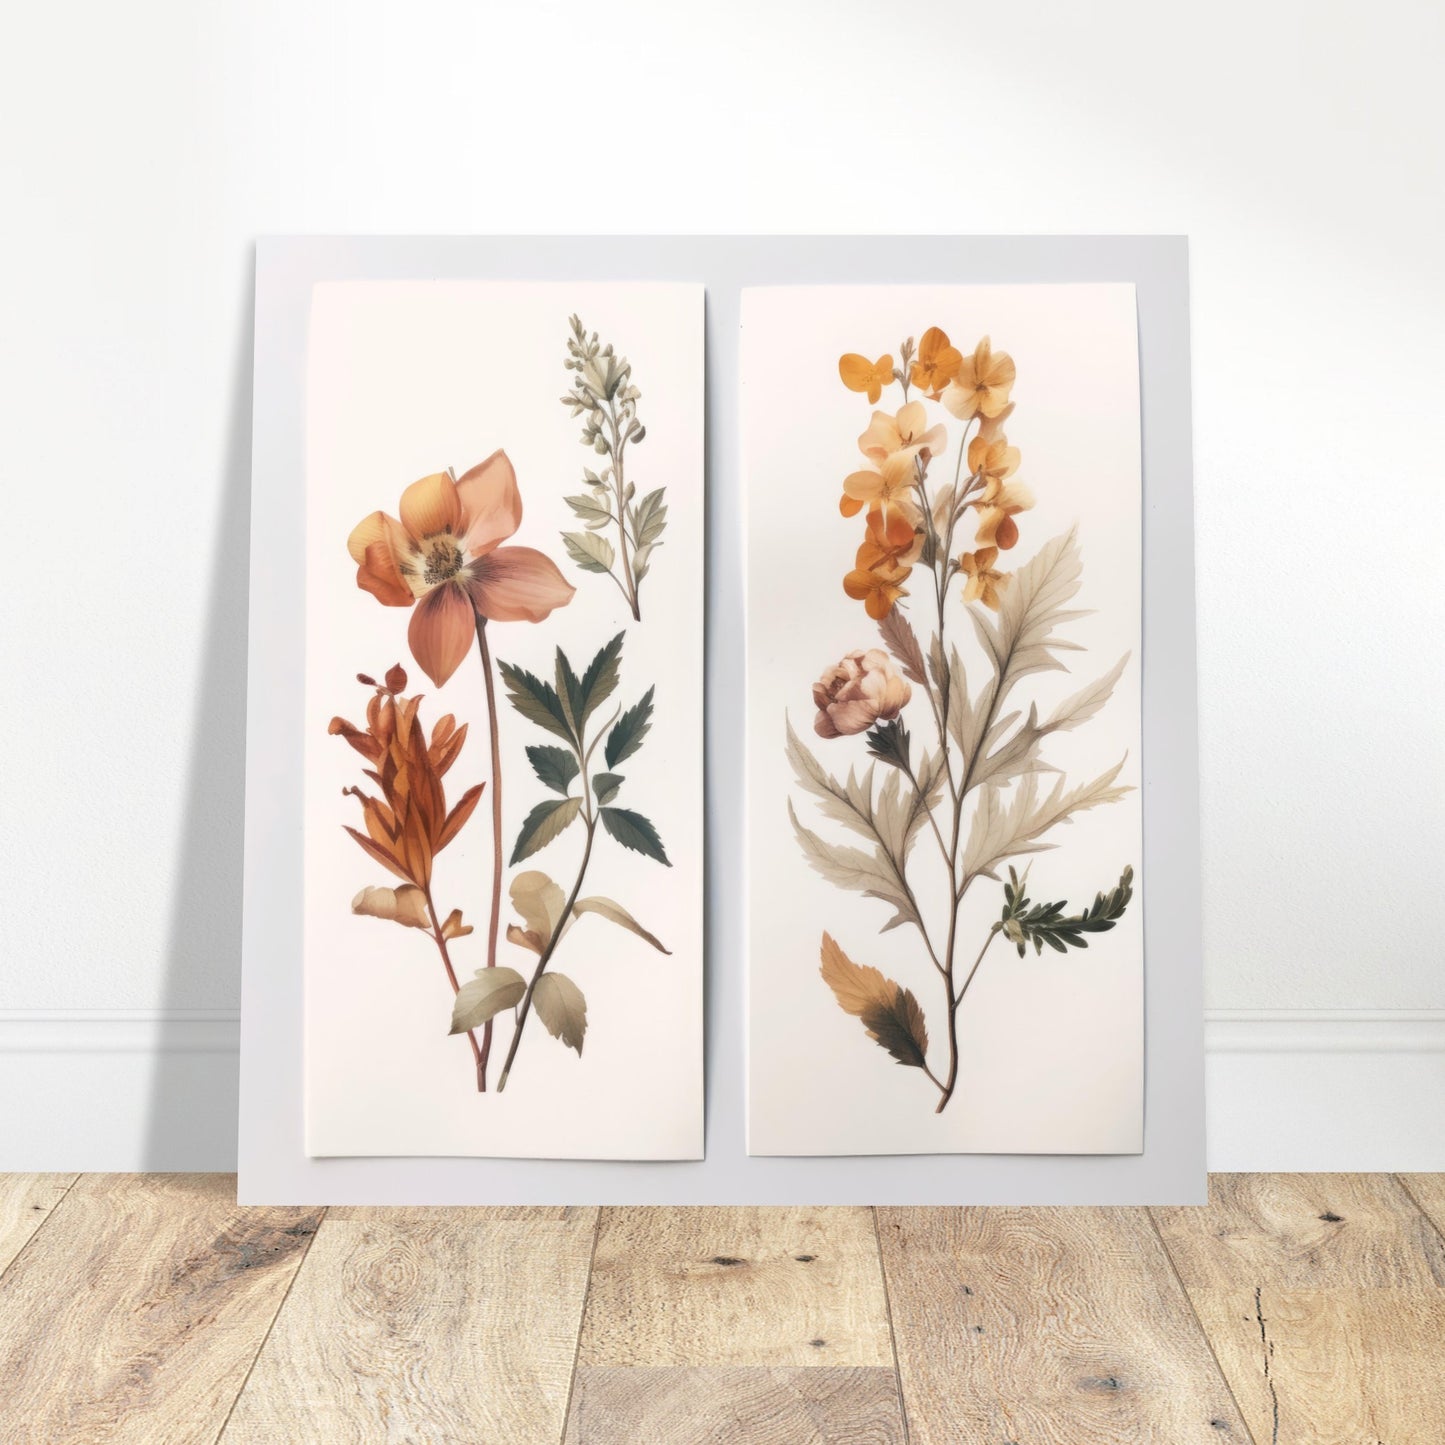 Elegance - Botanical Artwork #1- Print Room Ltd No Frame Selected 70x70 cm / 28x28"